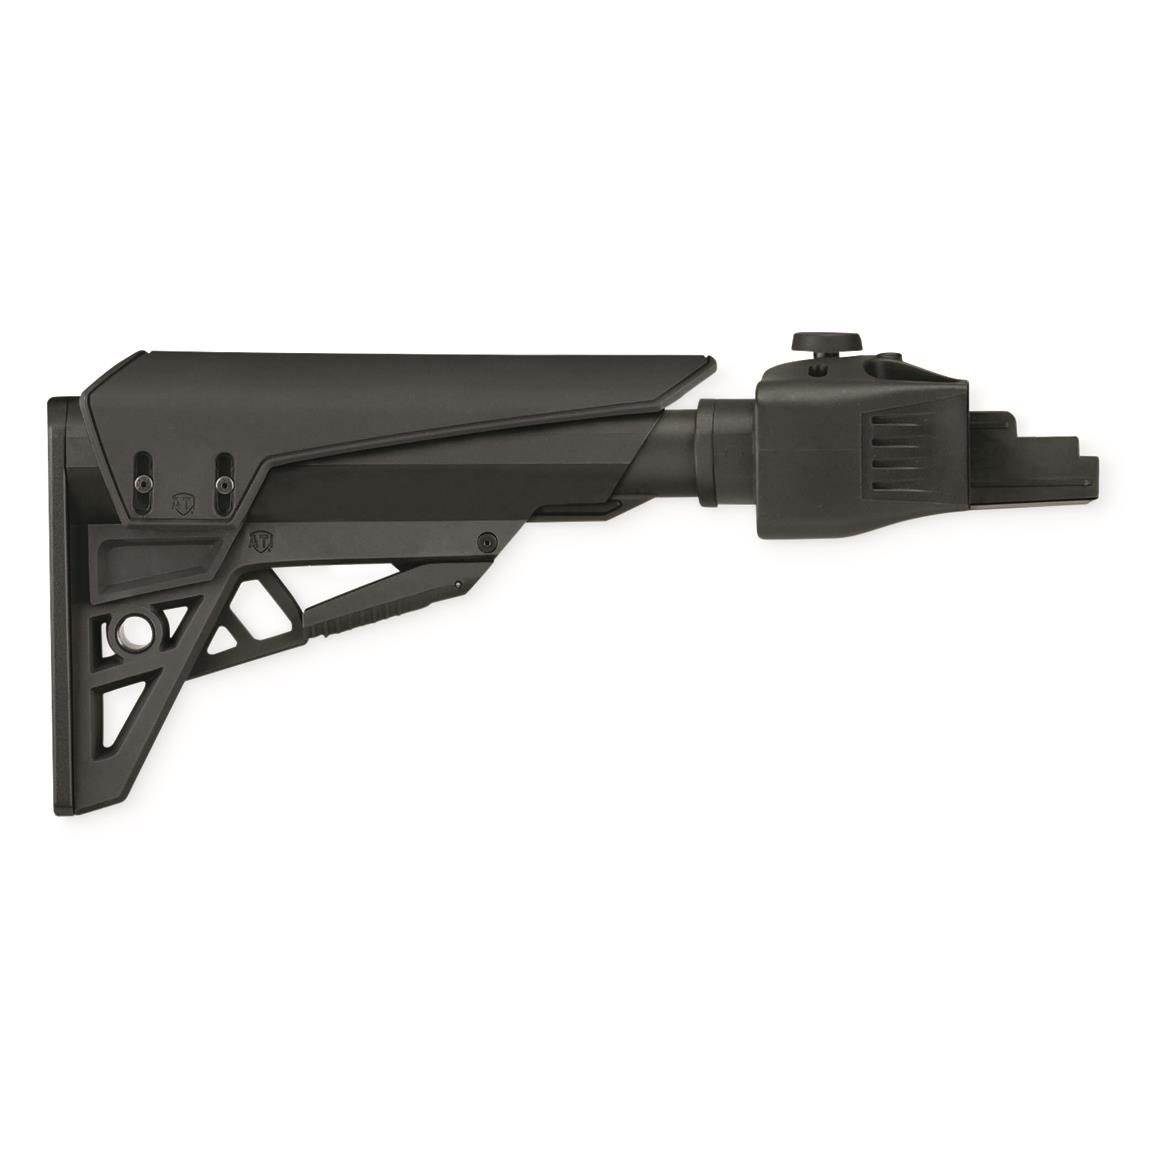 ATI TactLite Elite Adjustable AK-47 Stock with Non-Slip Recoil Pad